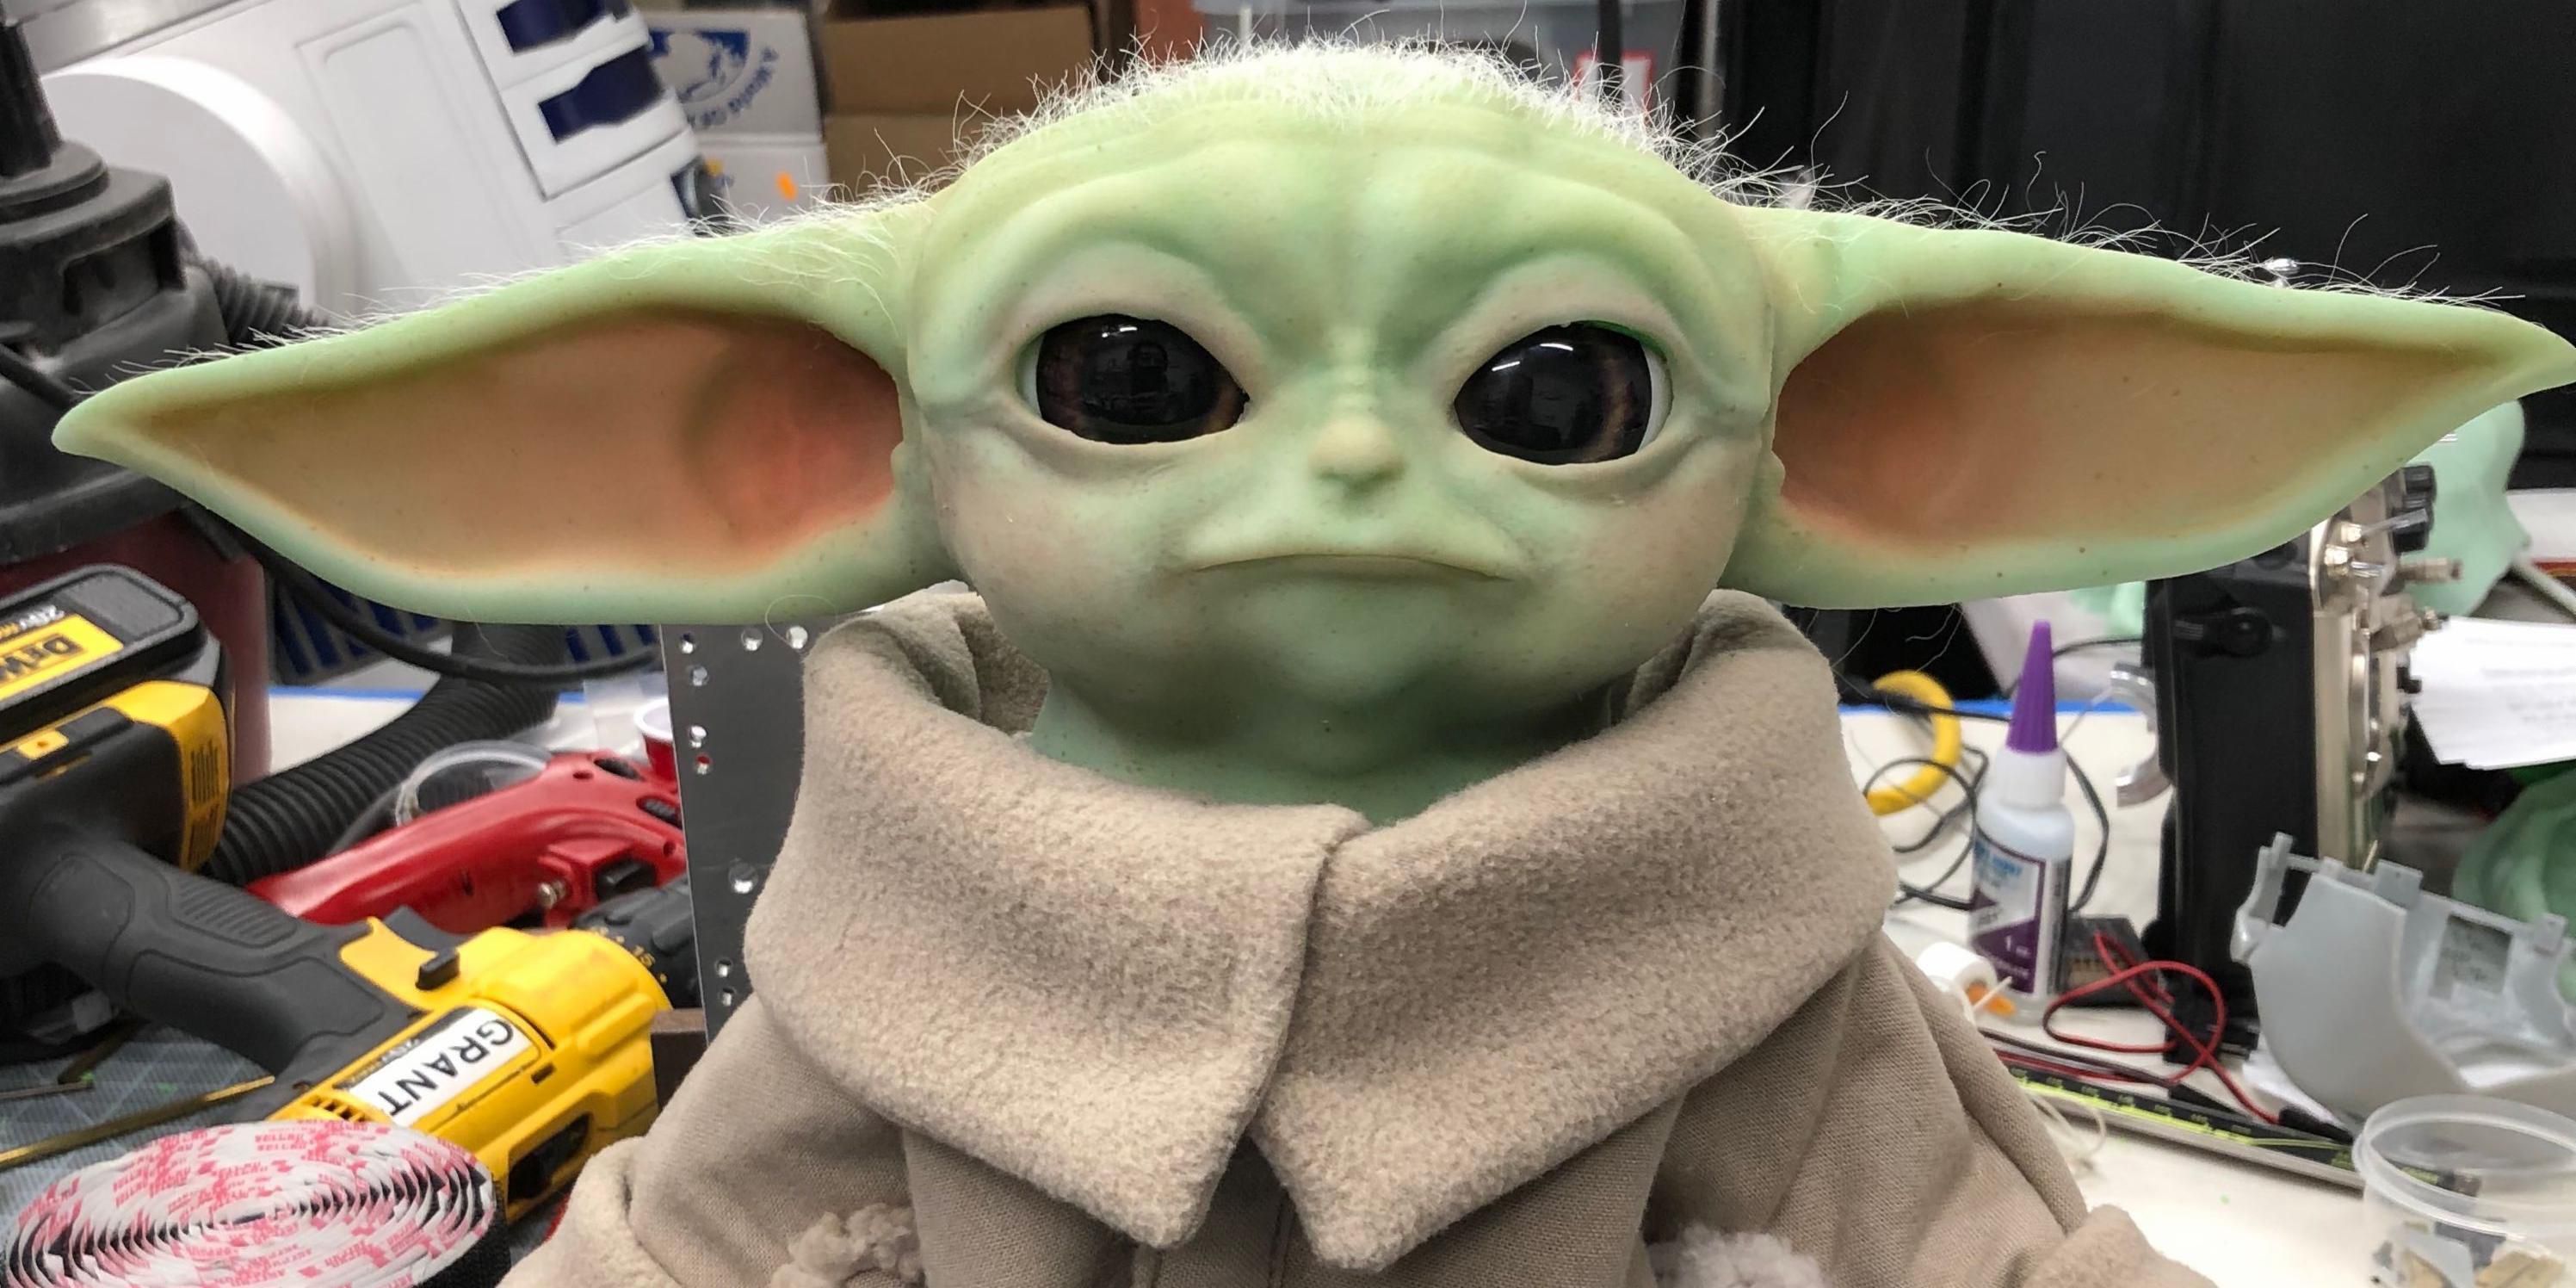 Animatronic Baby Yoda